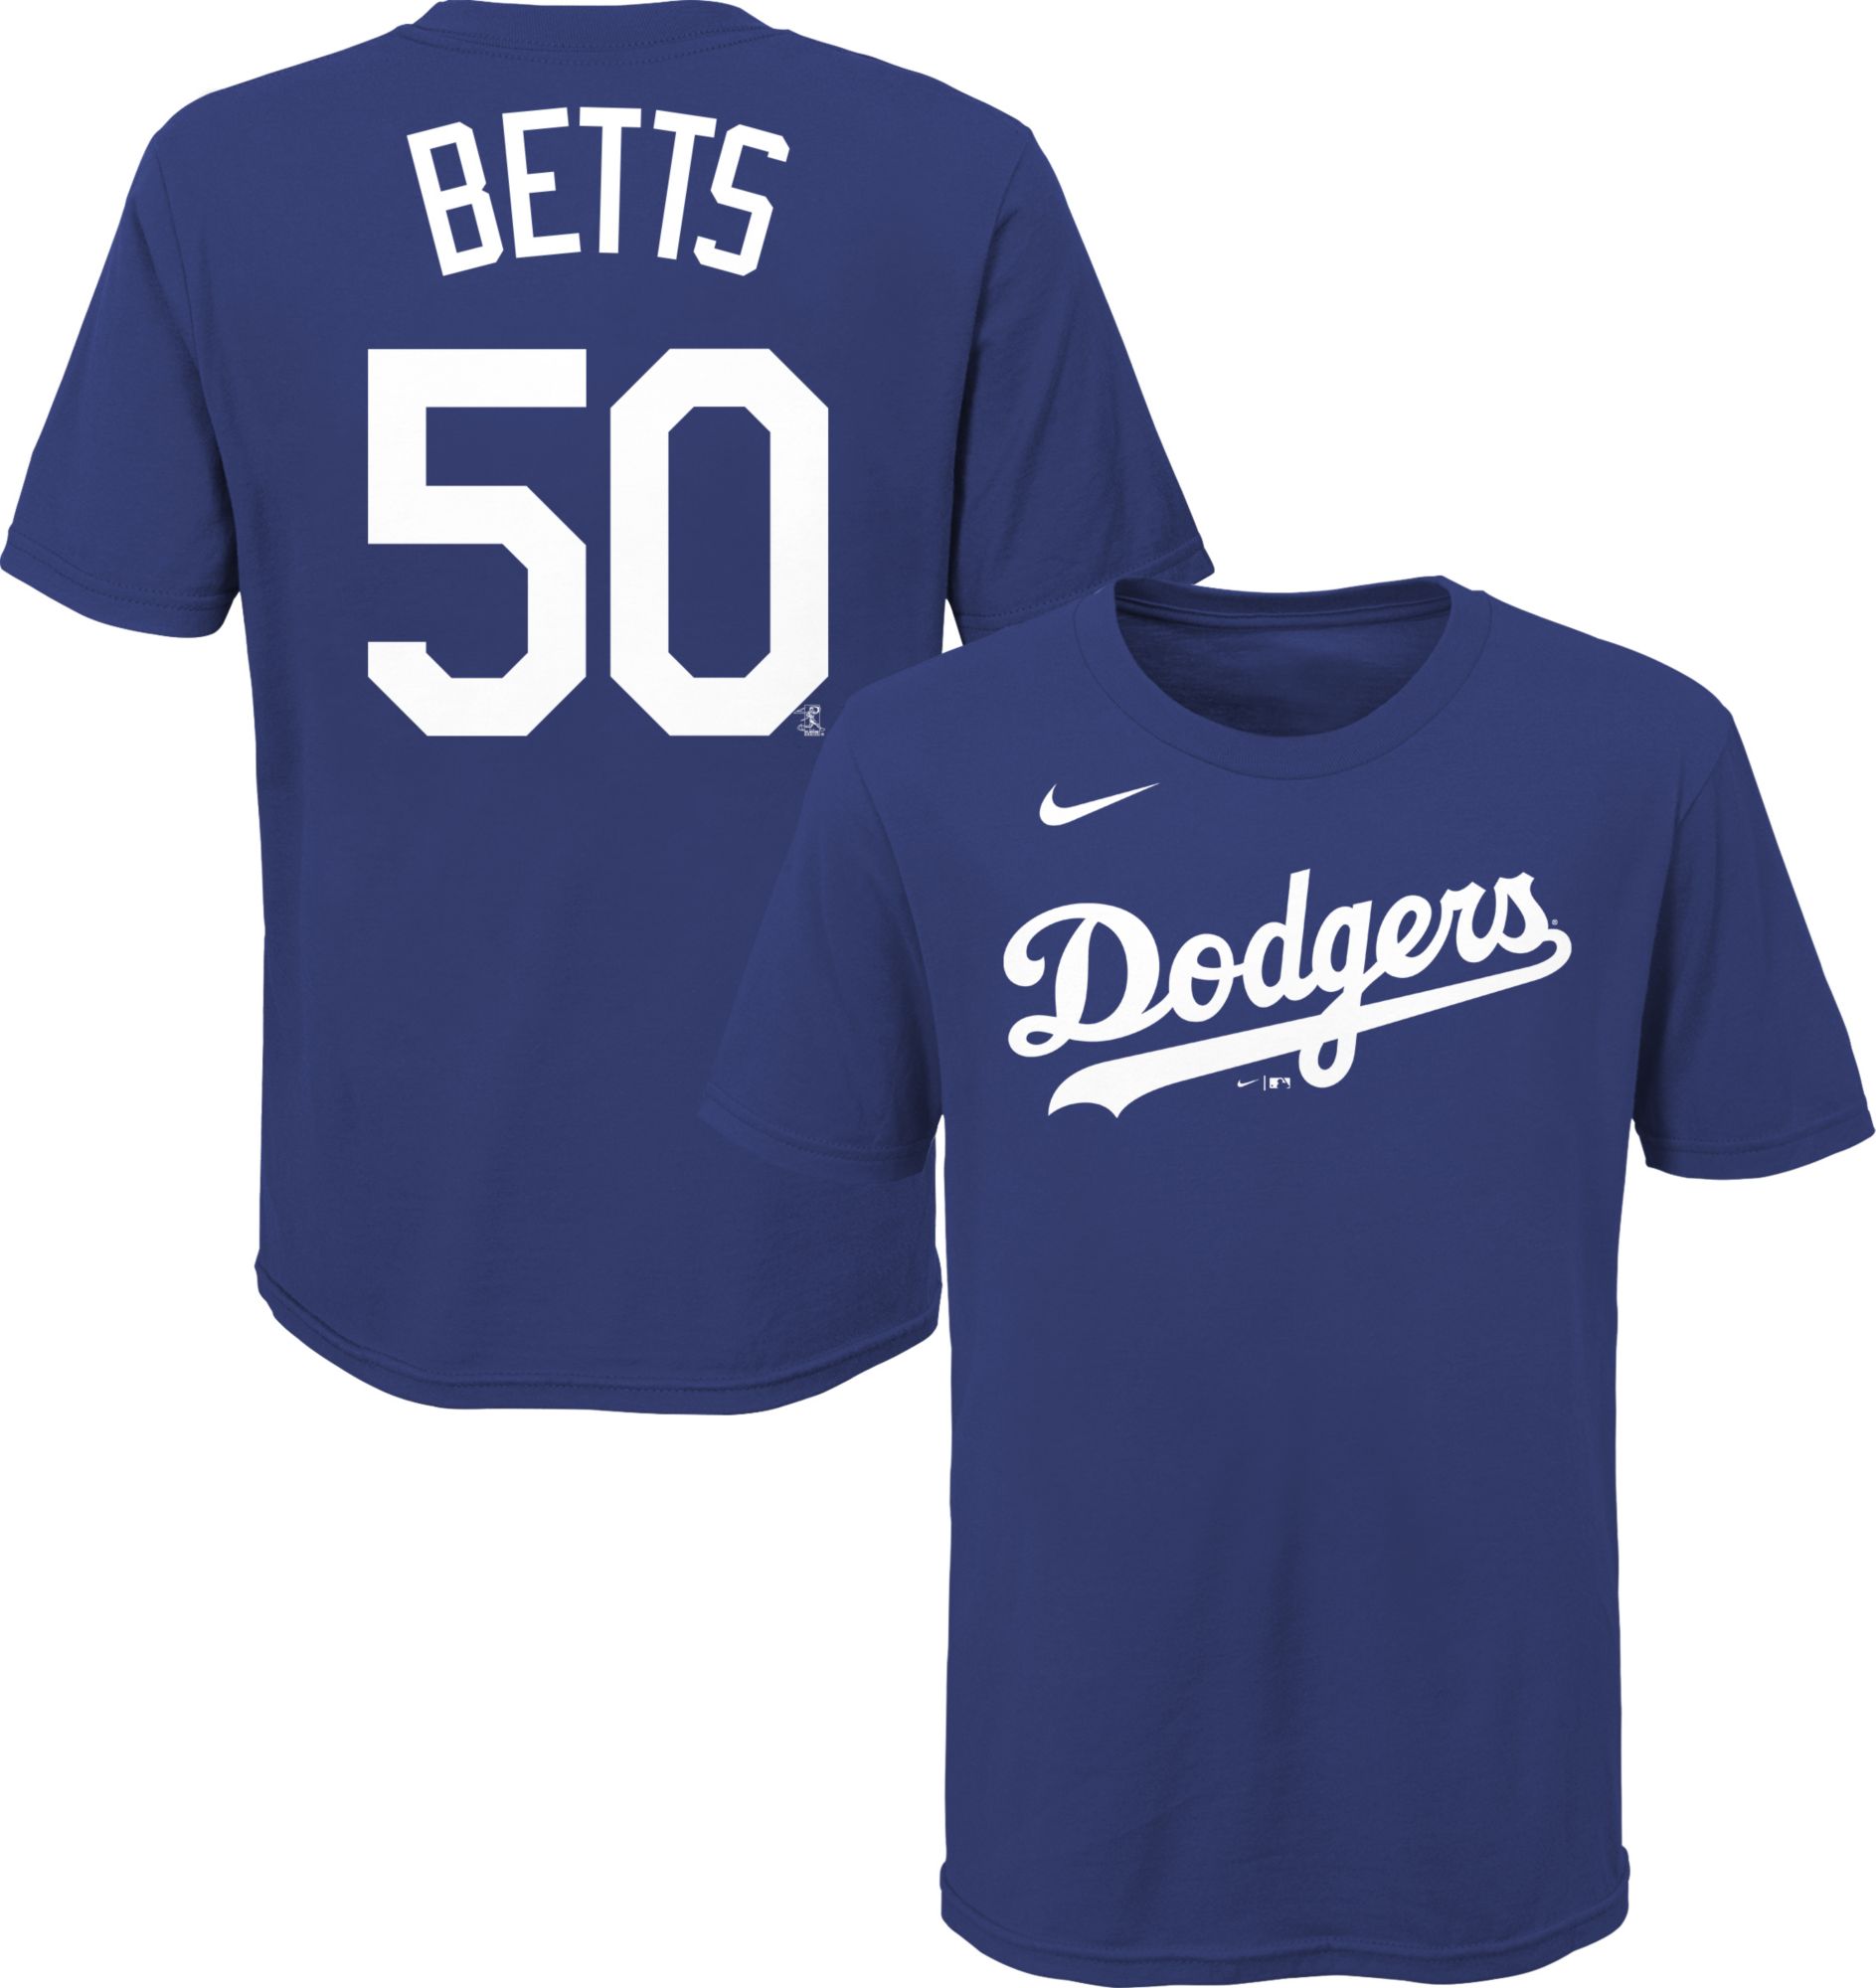 MLB Team Apparel Youth Los Angeles Dodgers Freddie Freeman #5 Blue T-Shirt